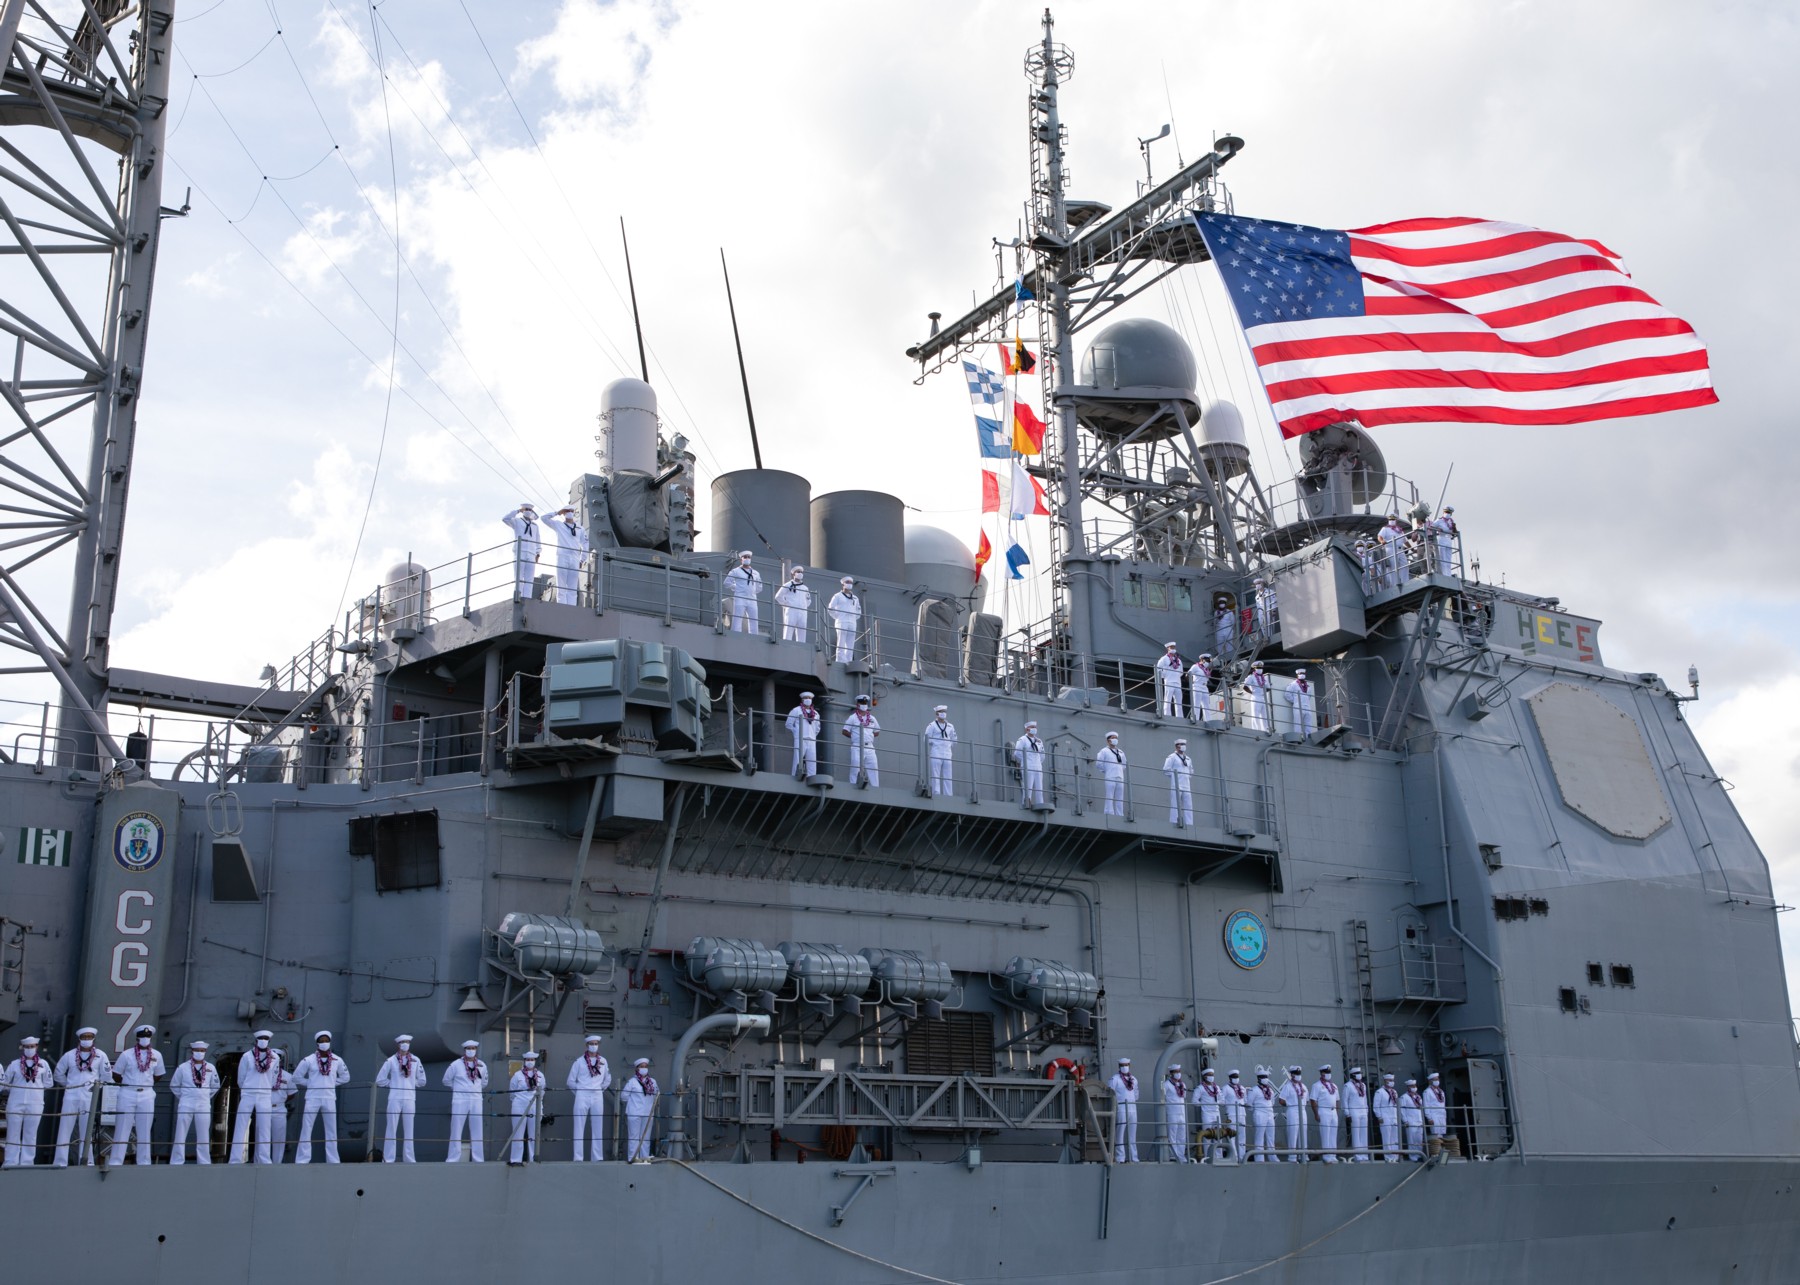 cg-73 uss port royal ticonderoga class guided missile cruiser navy returning joint base pearl harbor hickam hawaii 67